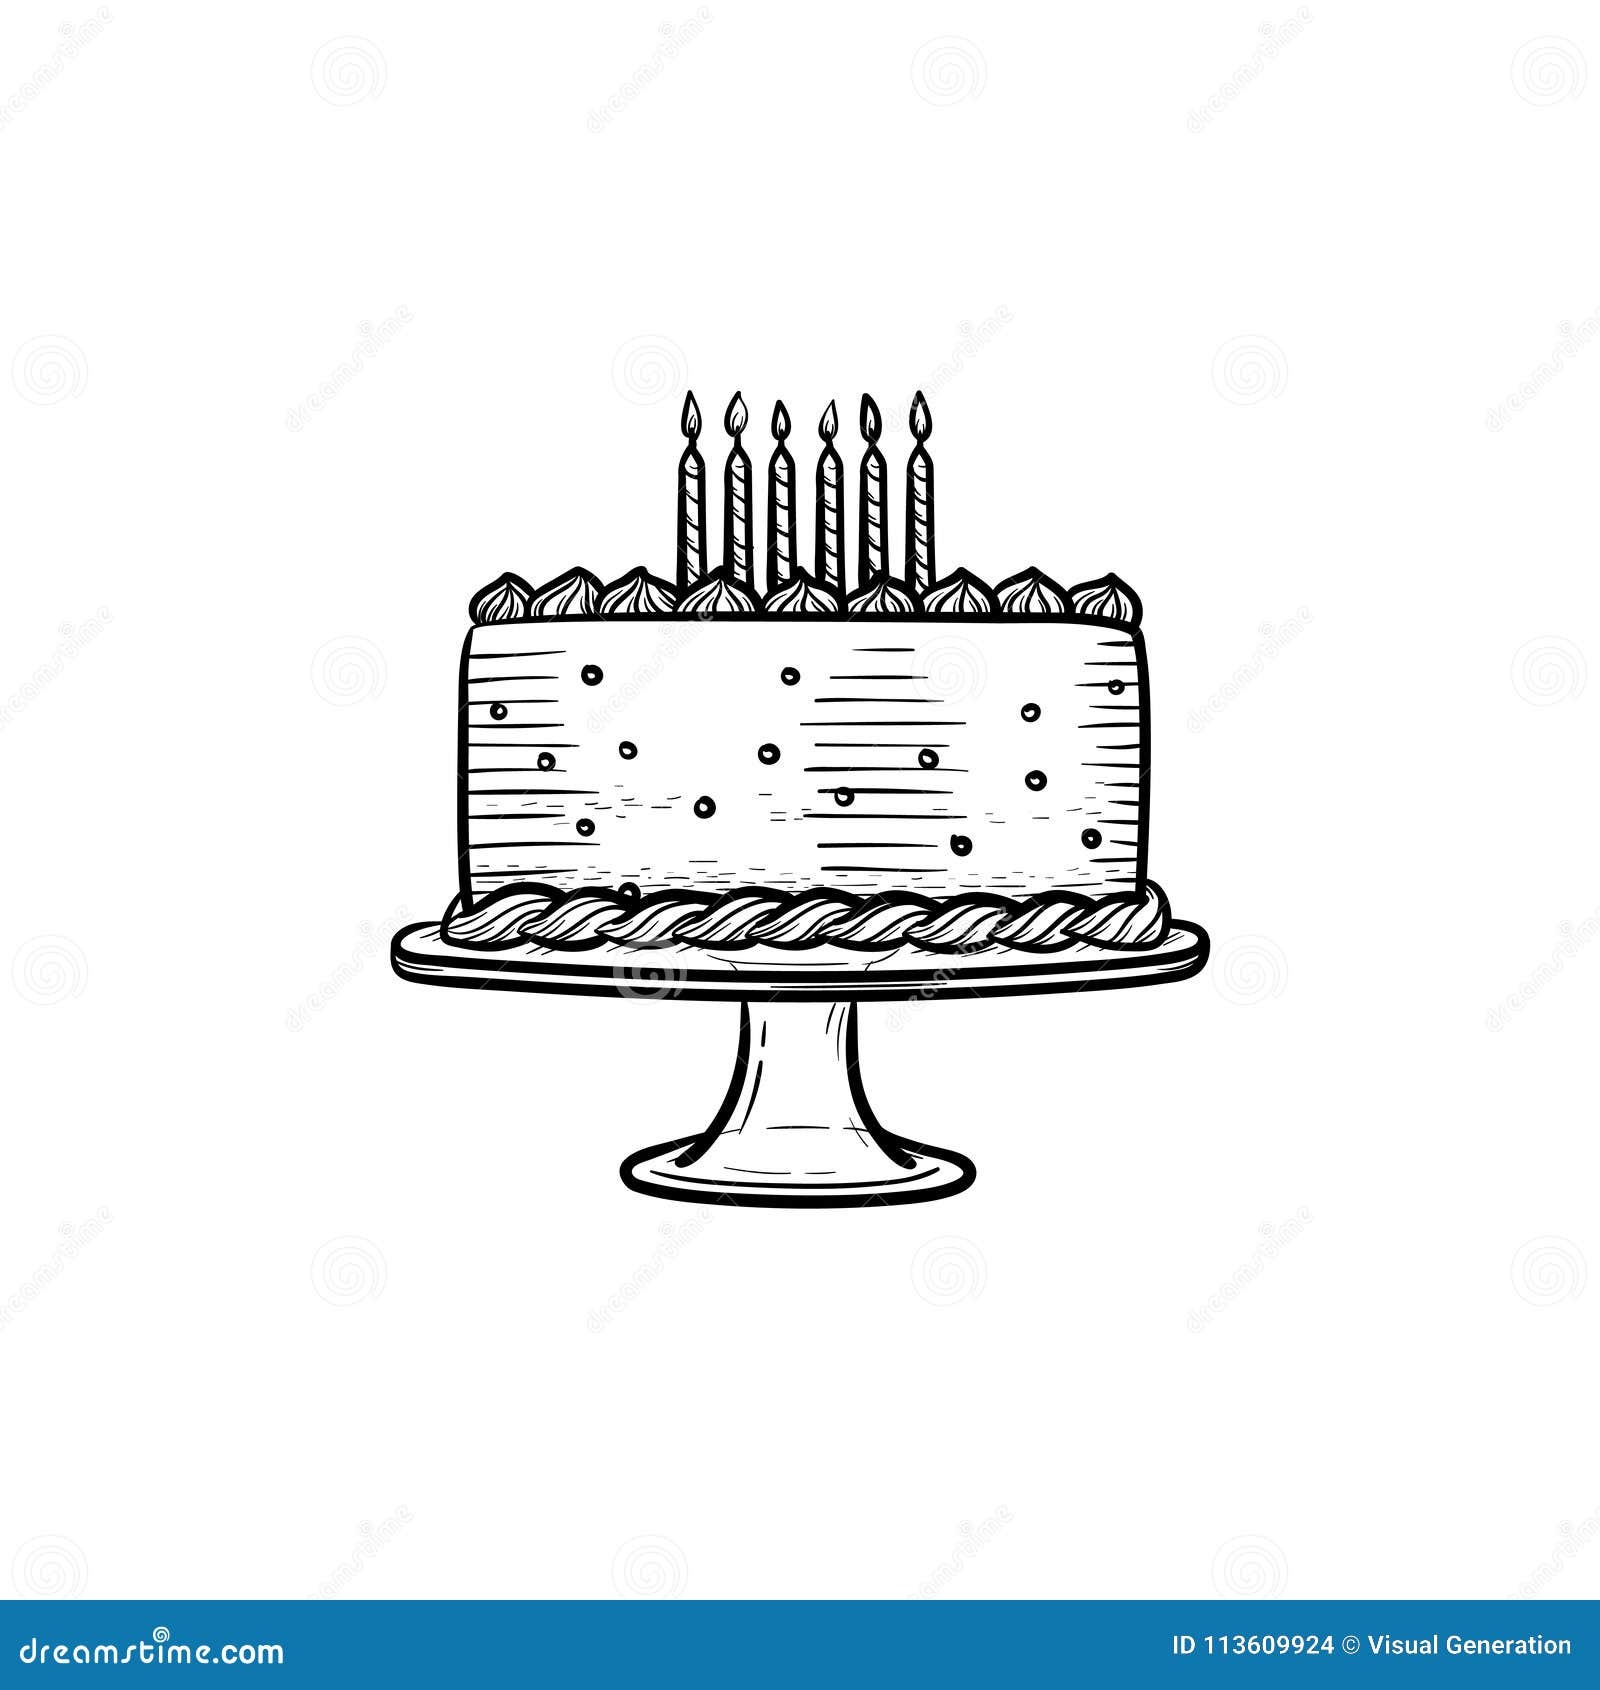 87456 Birthday Cake Draw Images Stock Photos  Vectors  Shutterstock